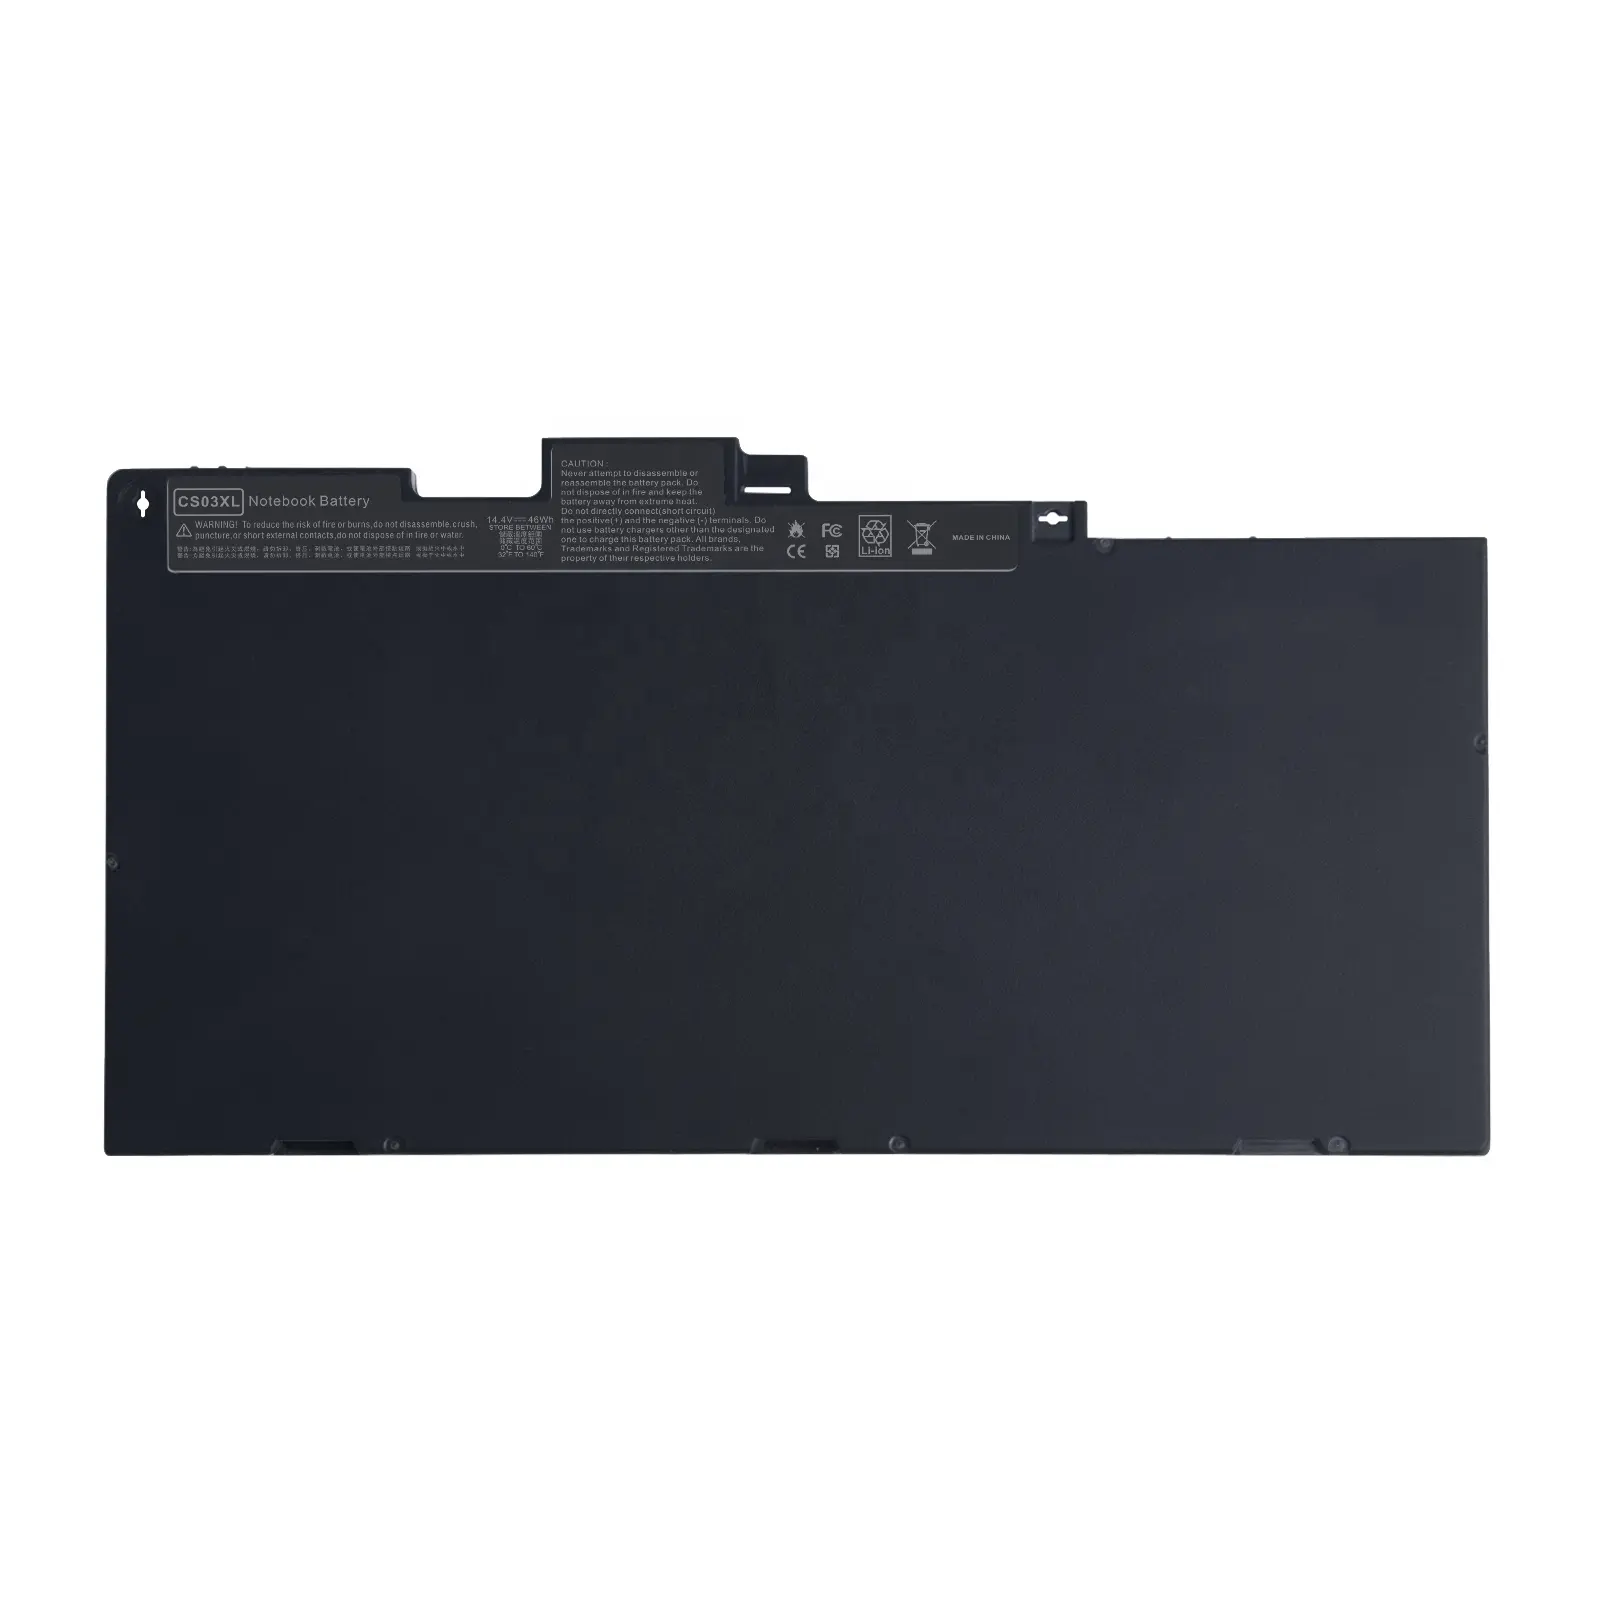 CS03XL laptop battery for HP 745 G3 840 G2 850 G3 ZBook 15u G3 CS03 800231-141 800513-001 Notebook Battery